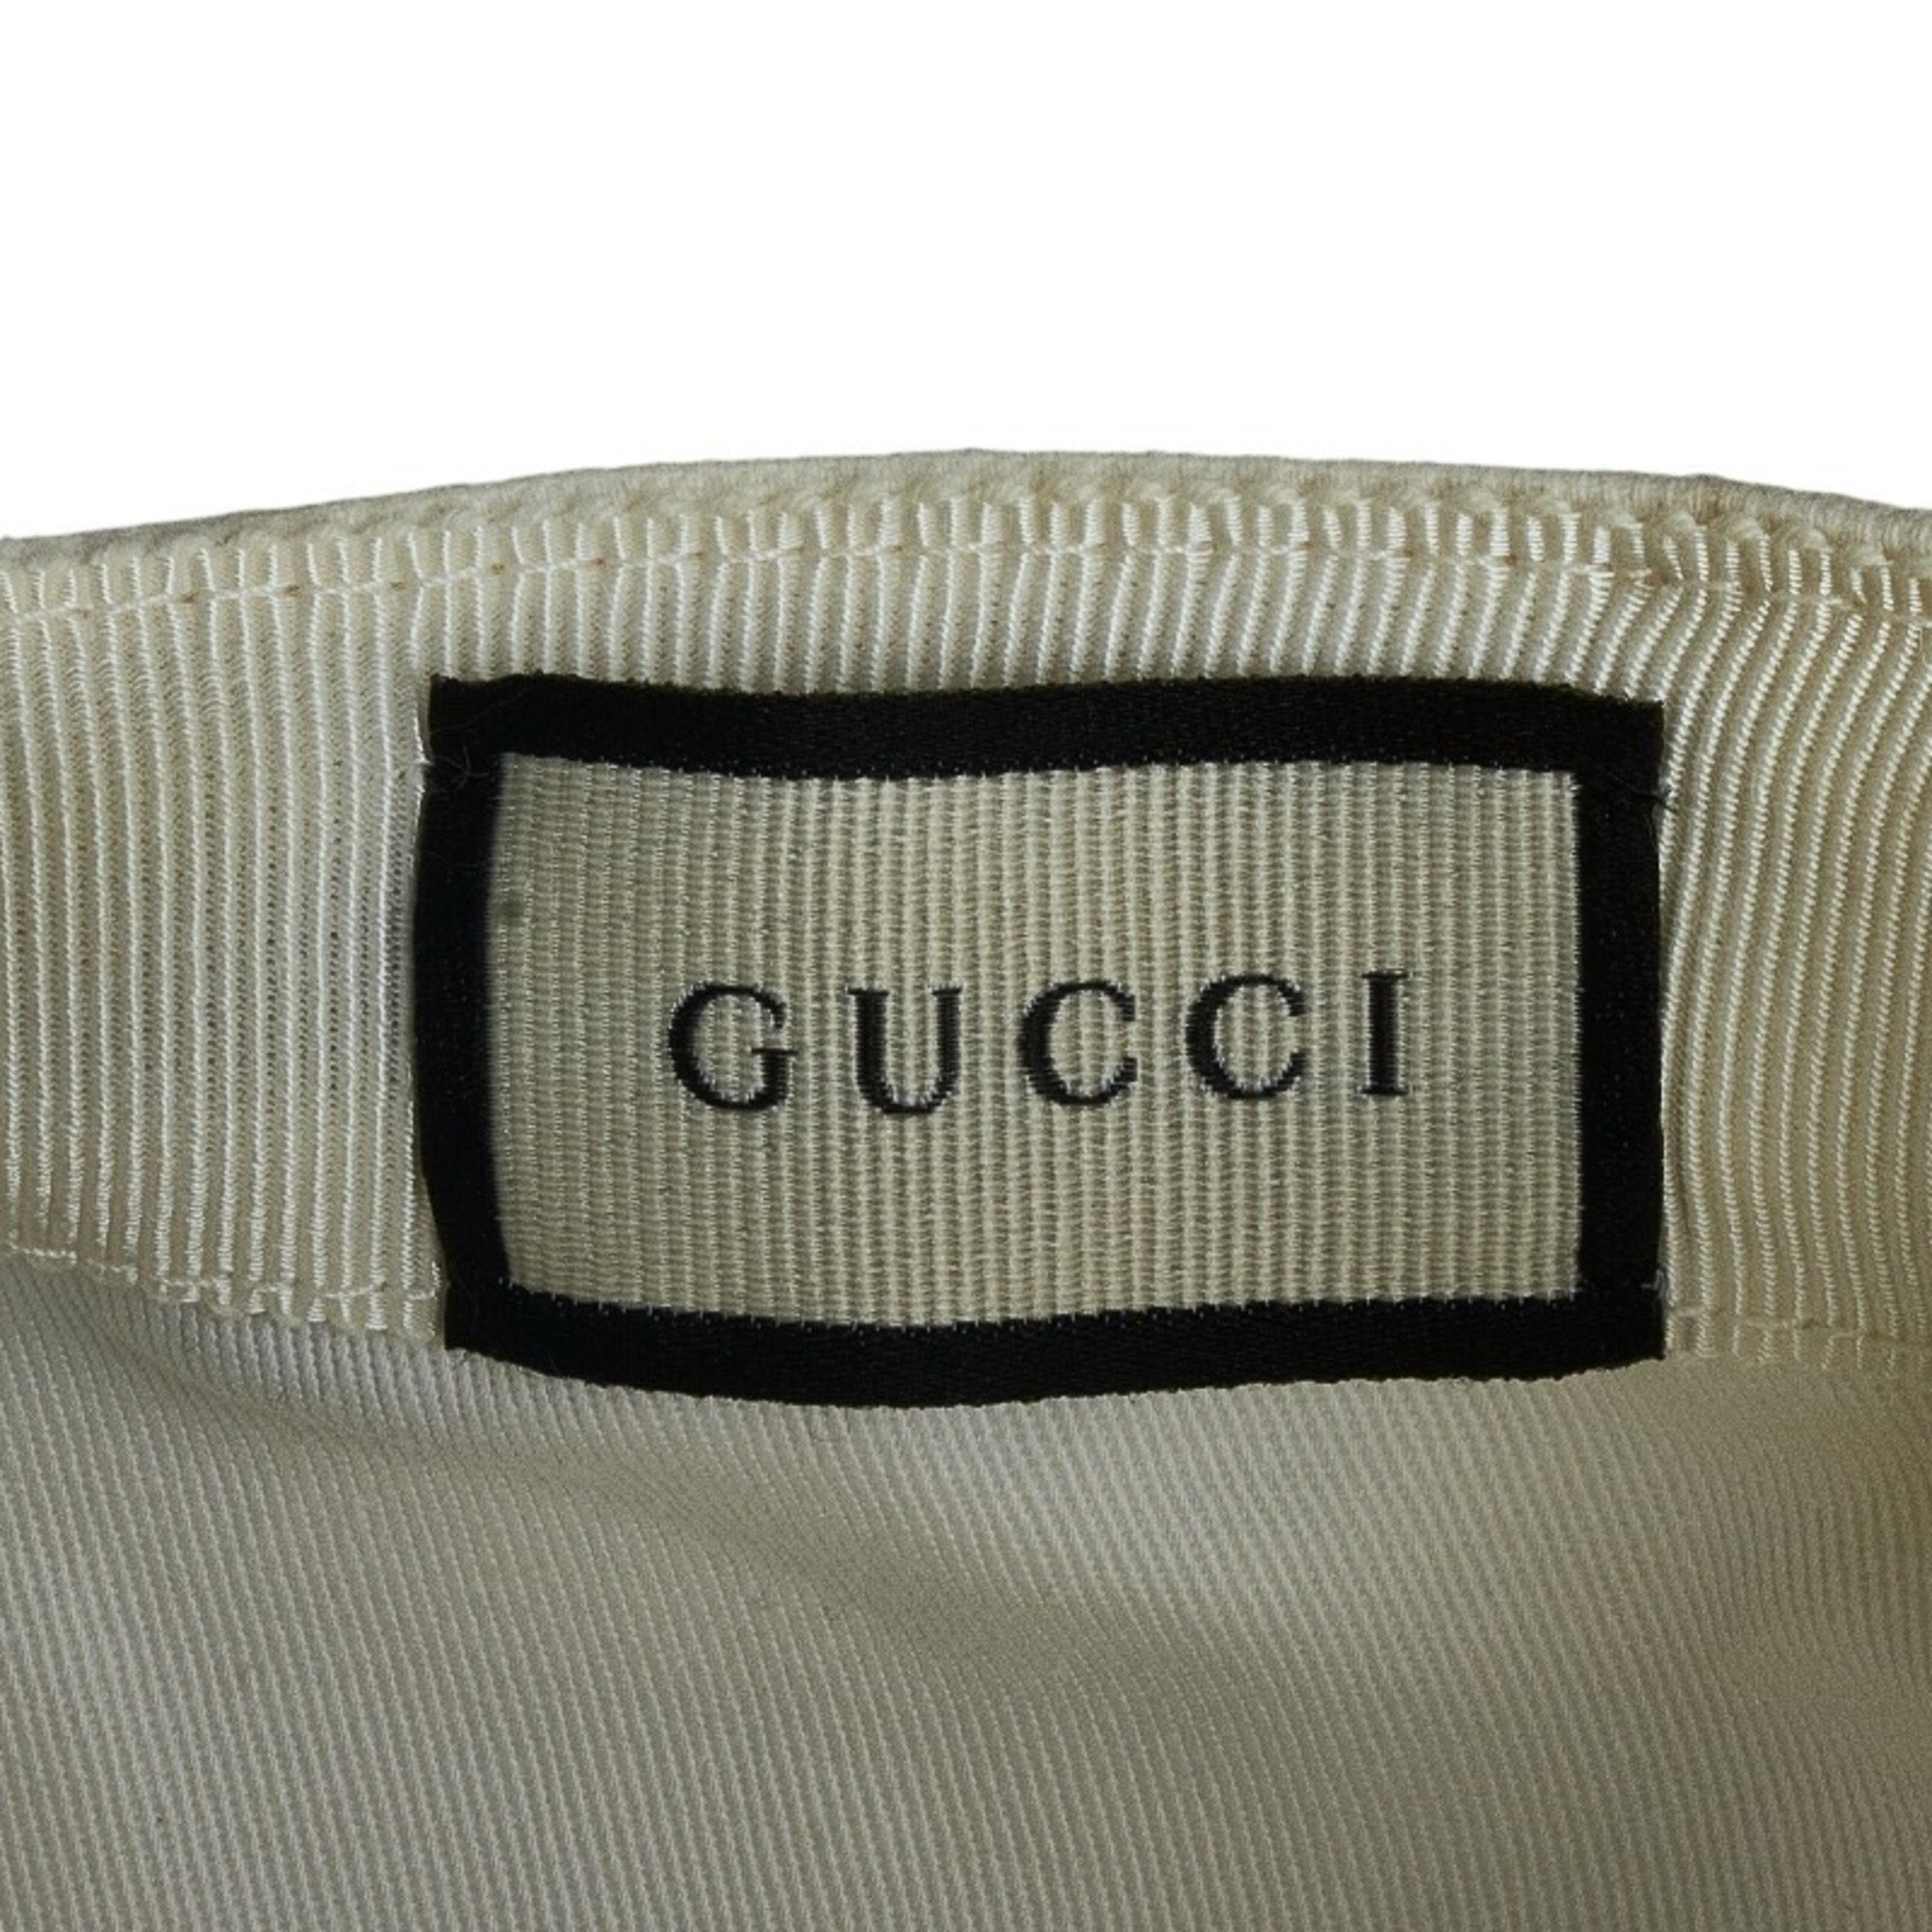 Gucci Baseball Cap 08.338.986 White Canvas Leather Women's GUCCI